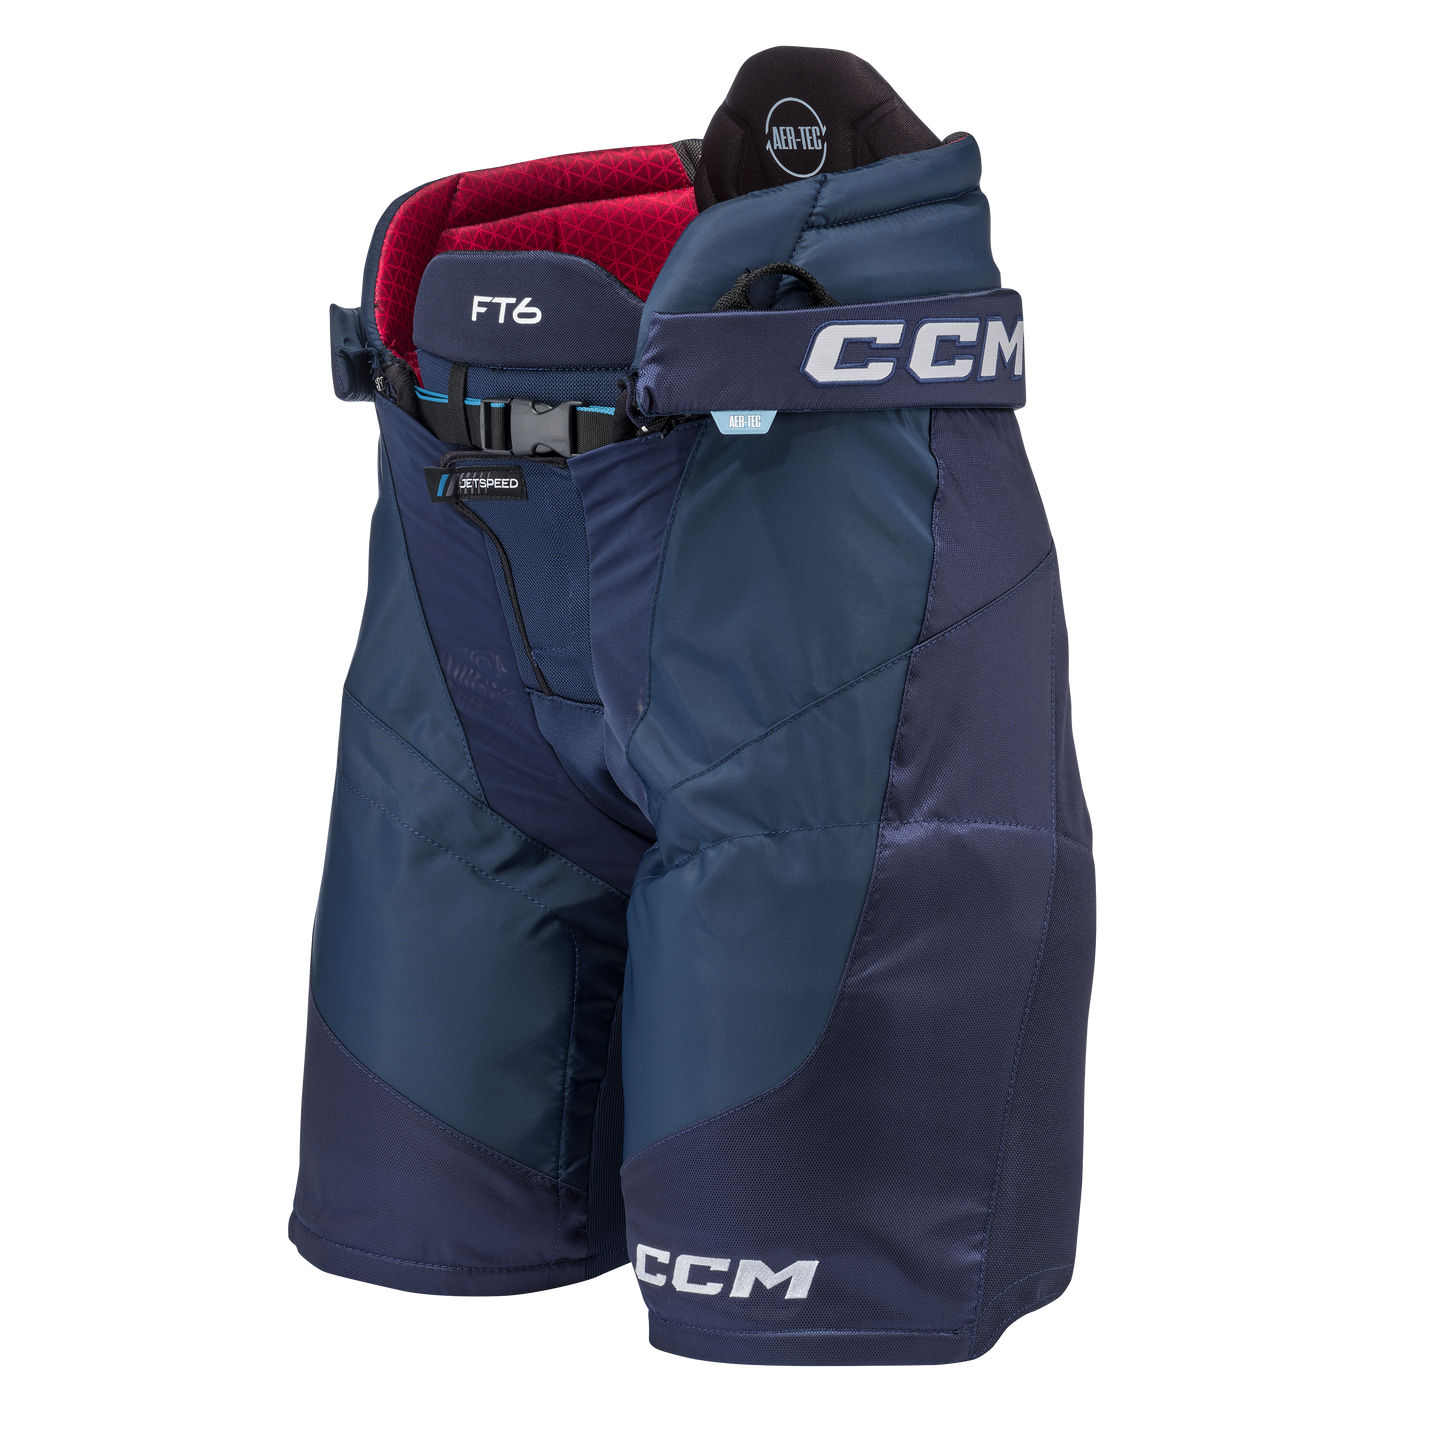 CCM Jetspeed FT6 Hockey Pants Junior